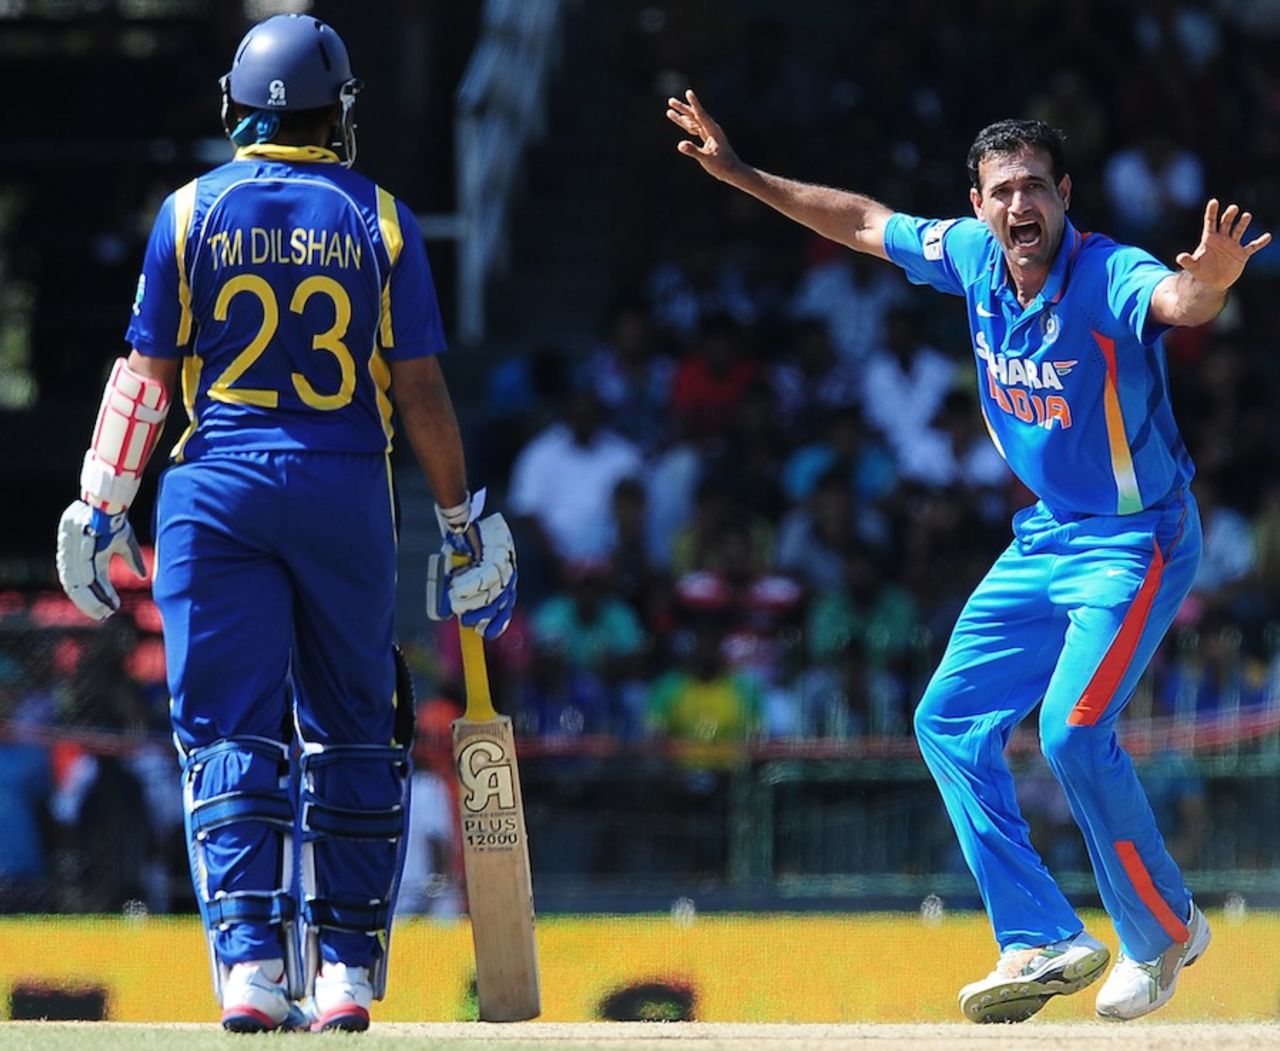 Irfan Pathan appeals for lbw against Upul Tharanga, Sri Lanka v India, 4th ODI, Colombo, July 31, 2012